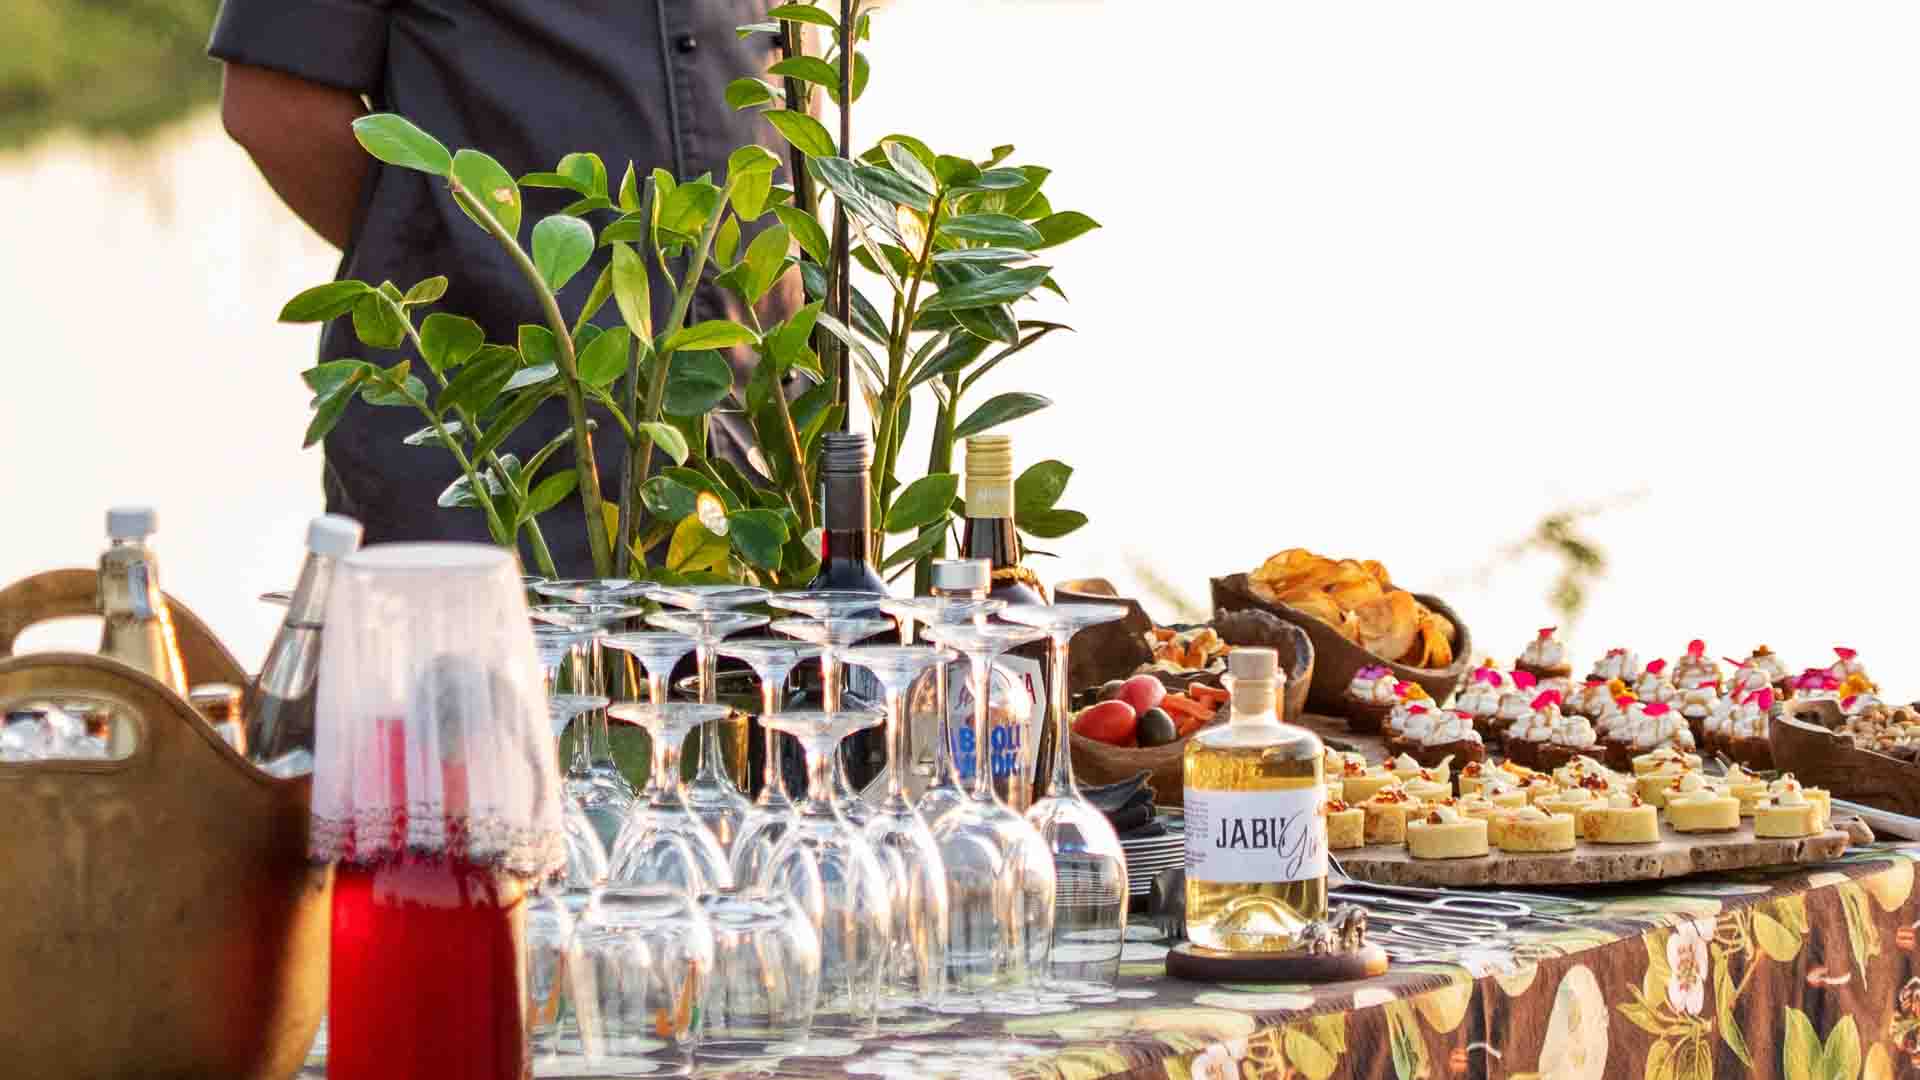 A table with glasses and snacks set up for sundowners at Jabulani Safari lodge.